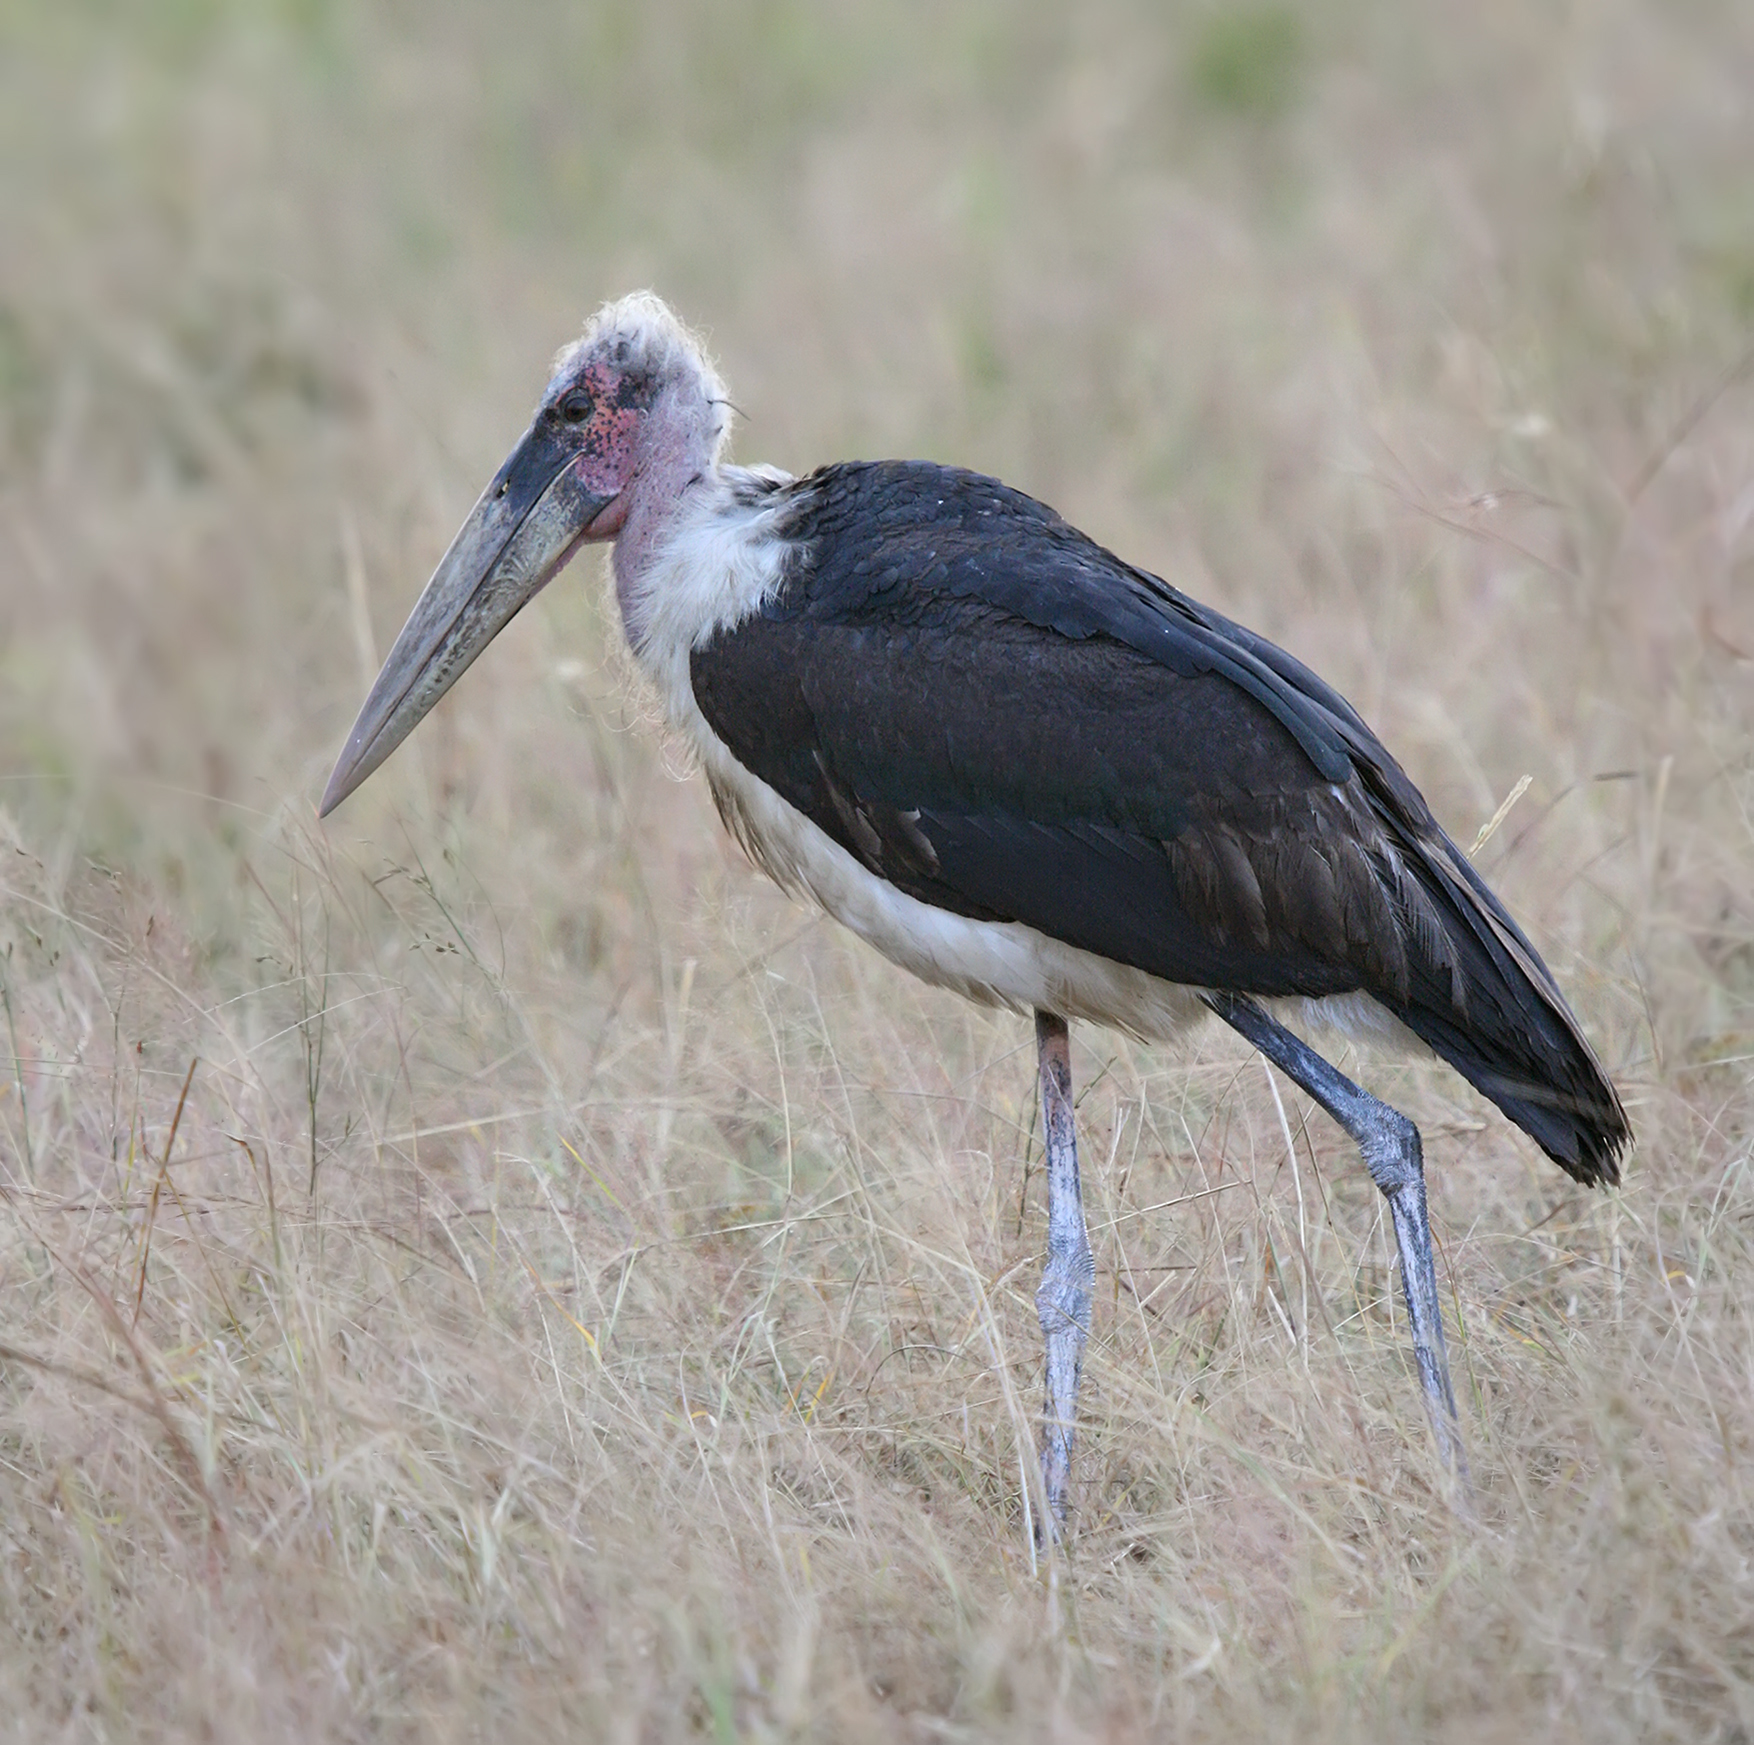 File:Marabou stork, Leptoptilos crumeniferus edit1.jpg - Wikipedia